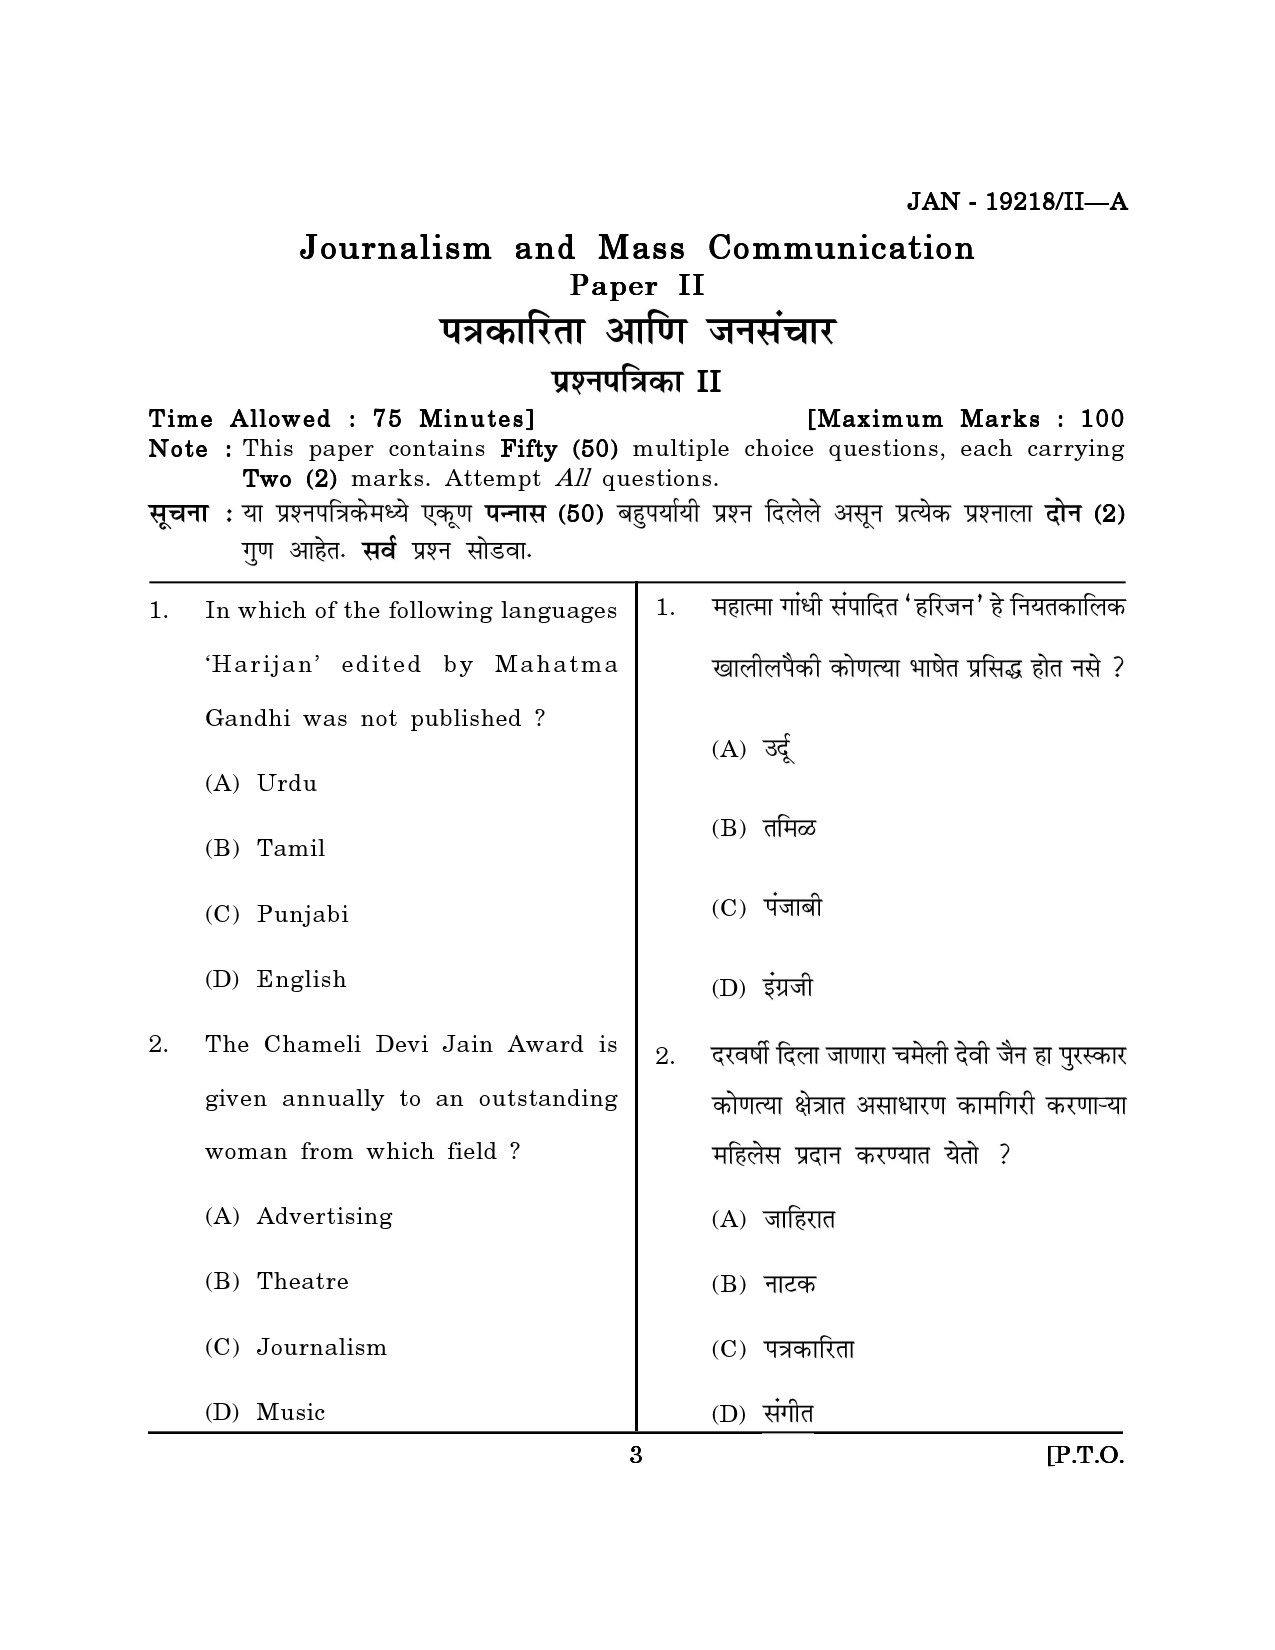 Maharashtra SET Journalism and Mass Communication Question Paper II January 2018 2